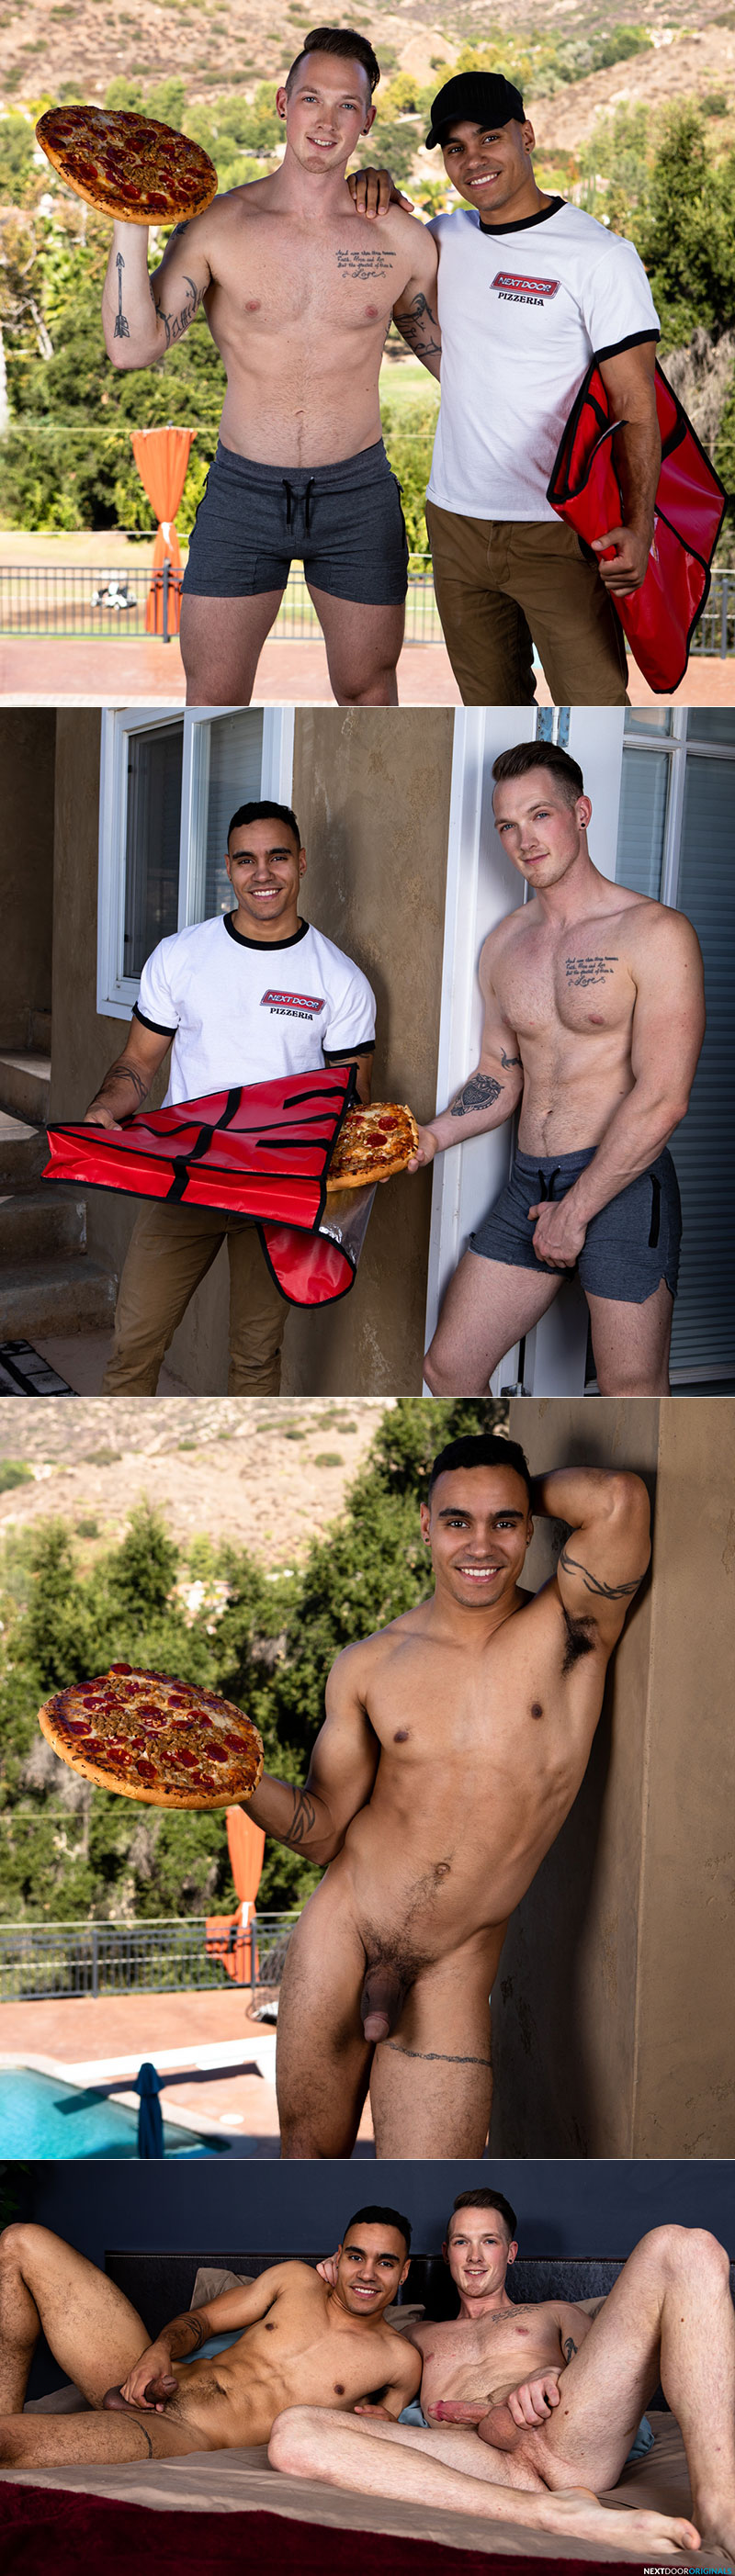 Next Door Studios: Anthony Moore creams Jackson Cooper's hole in "Pizza Delivery"